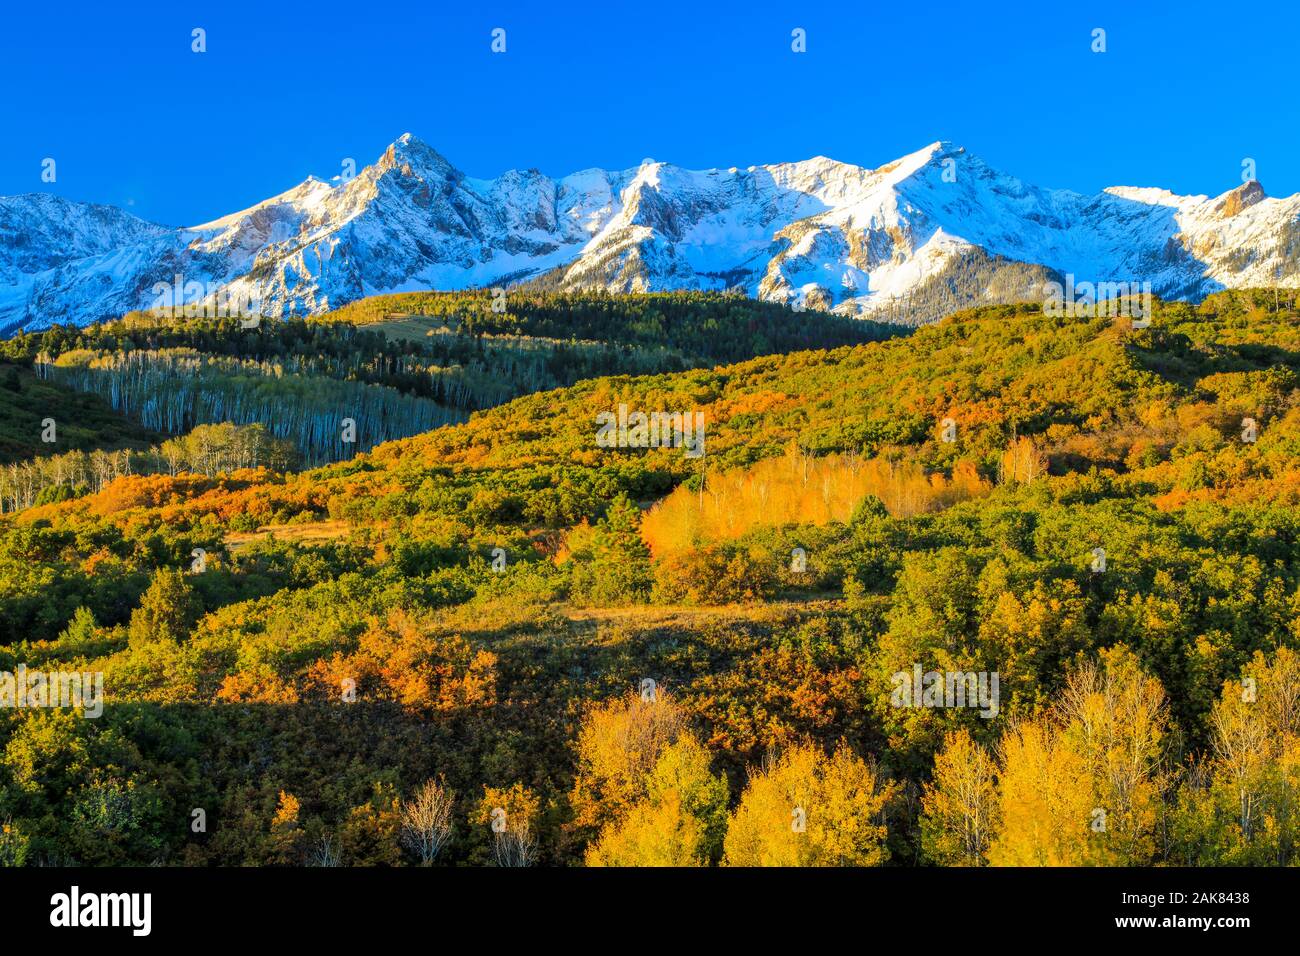 Dallas Divide Colorado Rocky Mountain landscape in fall colors with snow Stock Photo